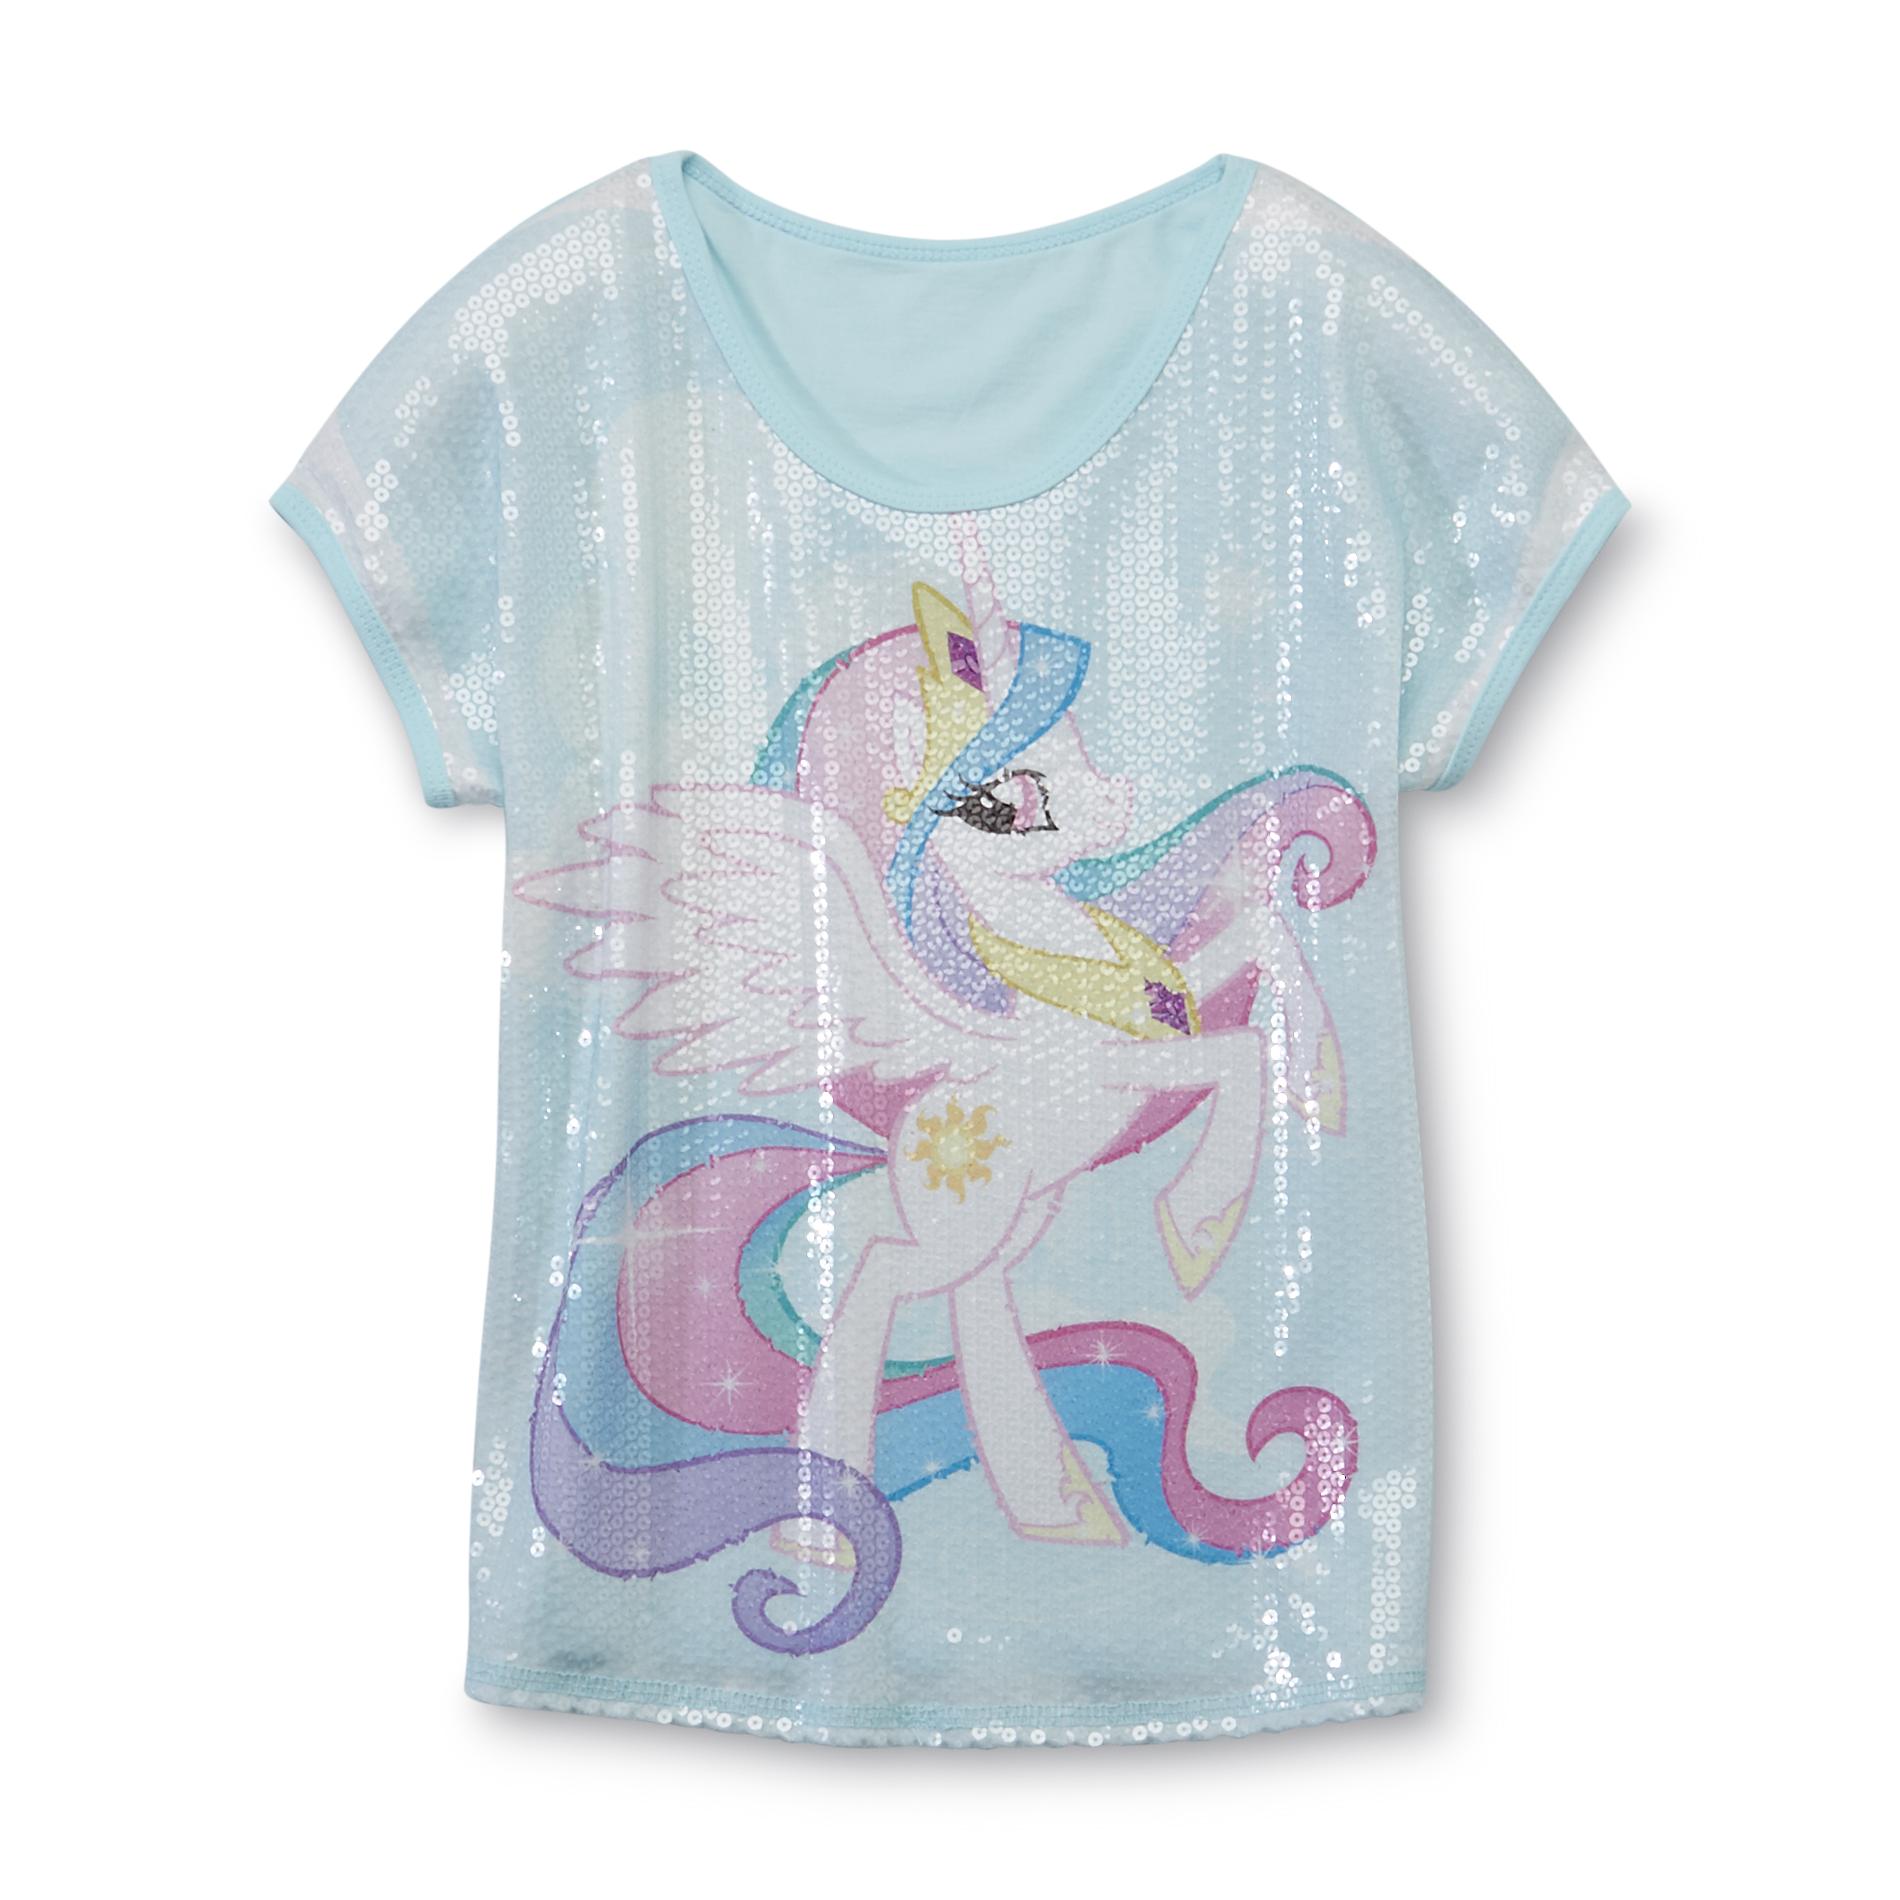 My Little Pony Girl's Graphic T-Shirt - Princess Celestia